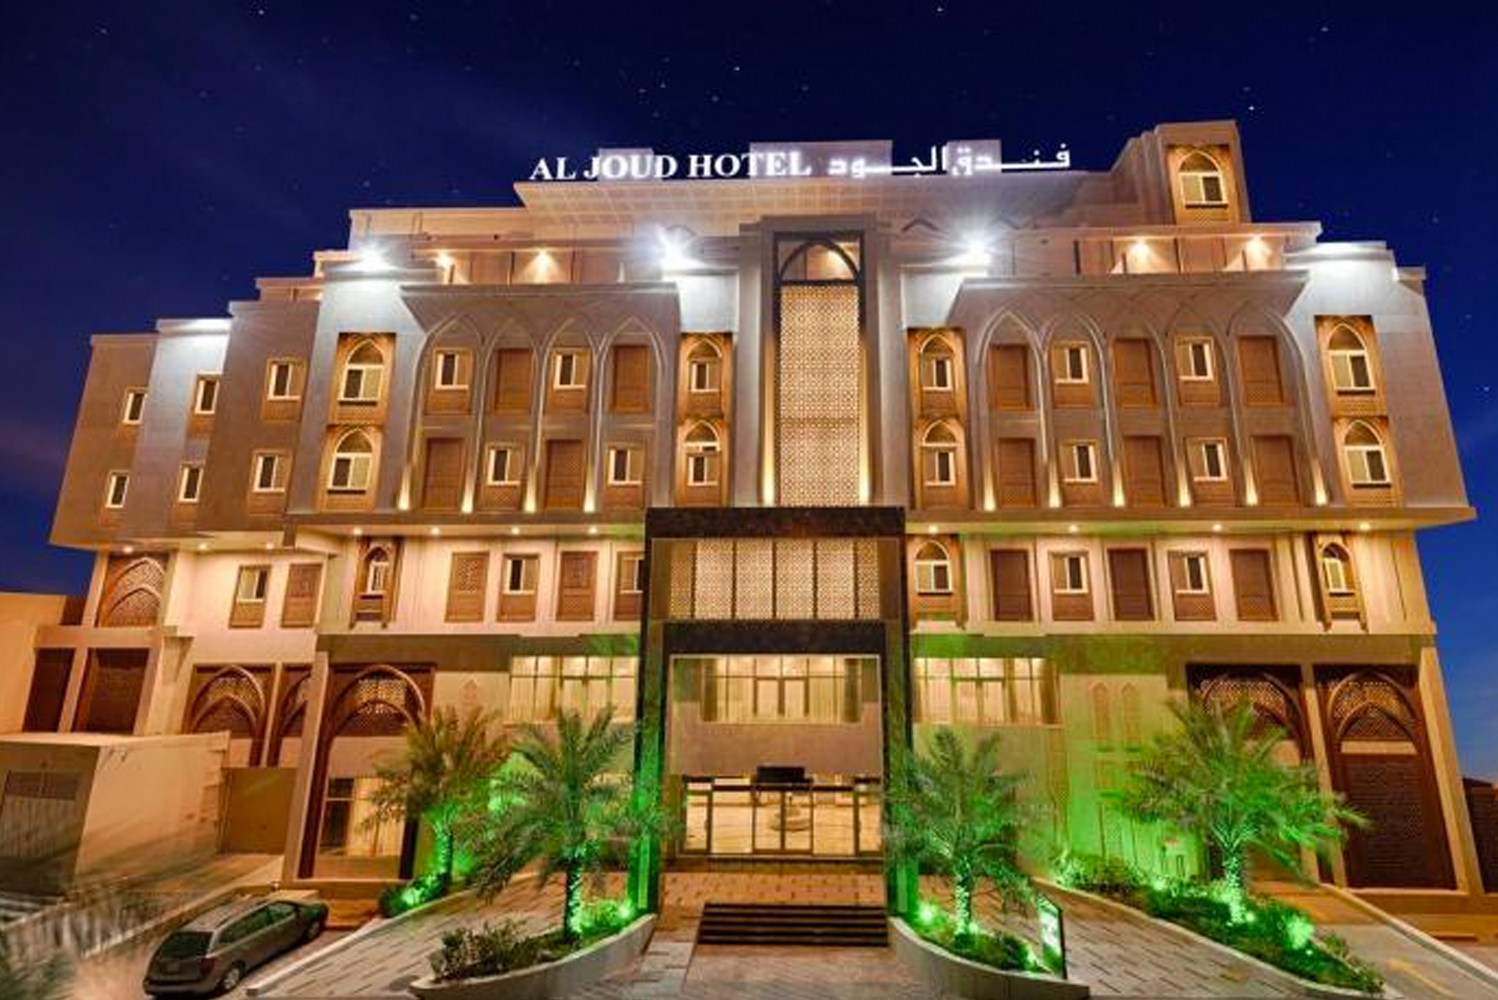 Al Joud Hotel opened in Mecca Saudi Arabia